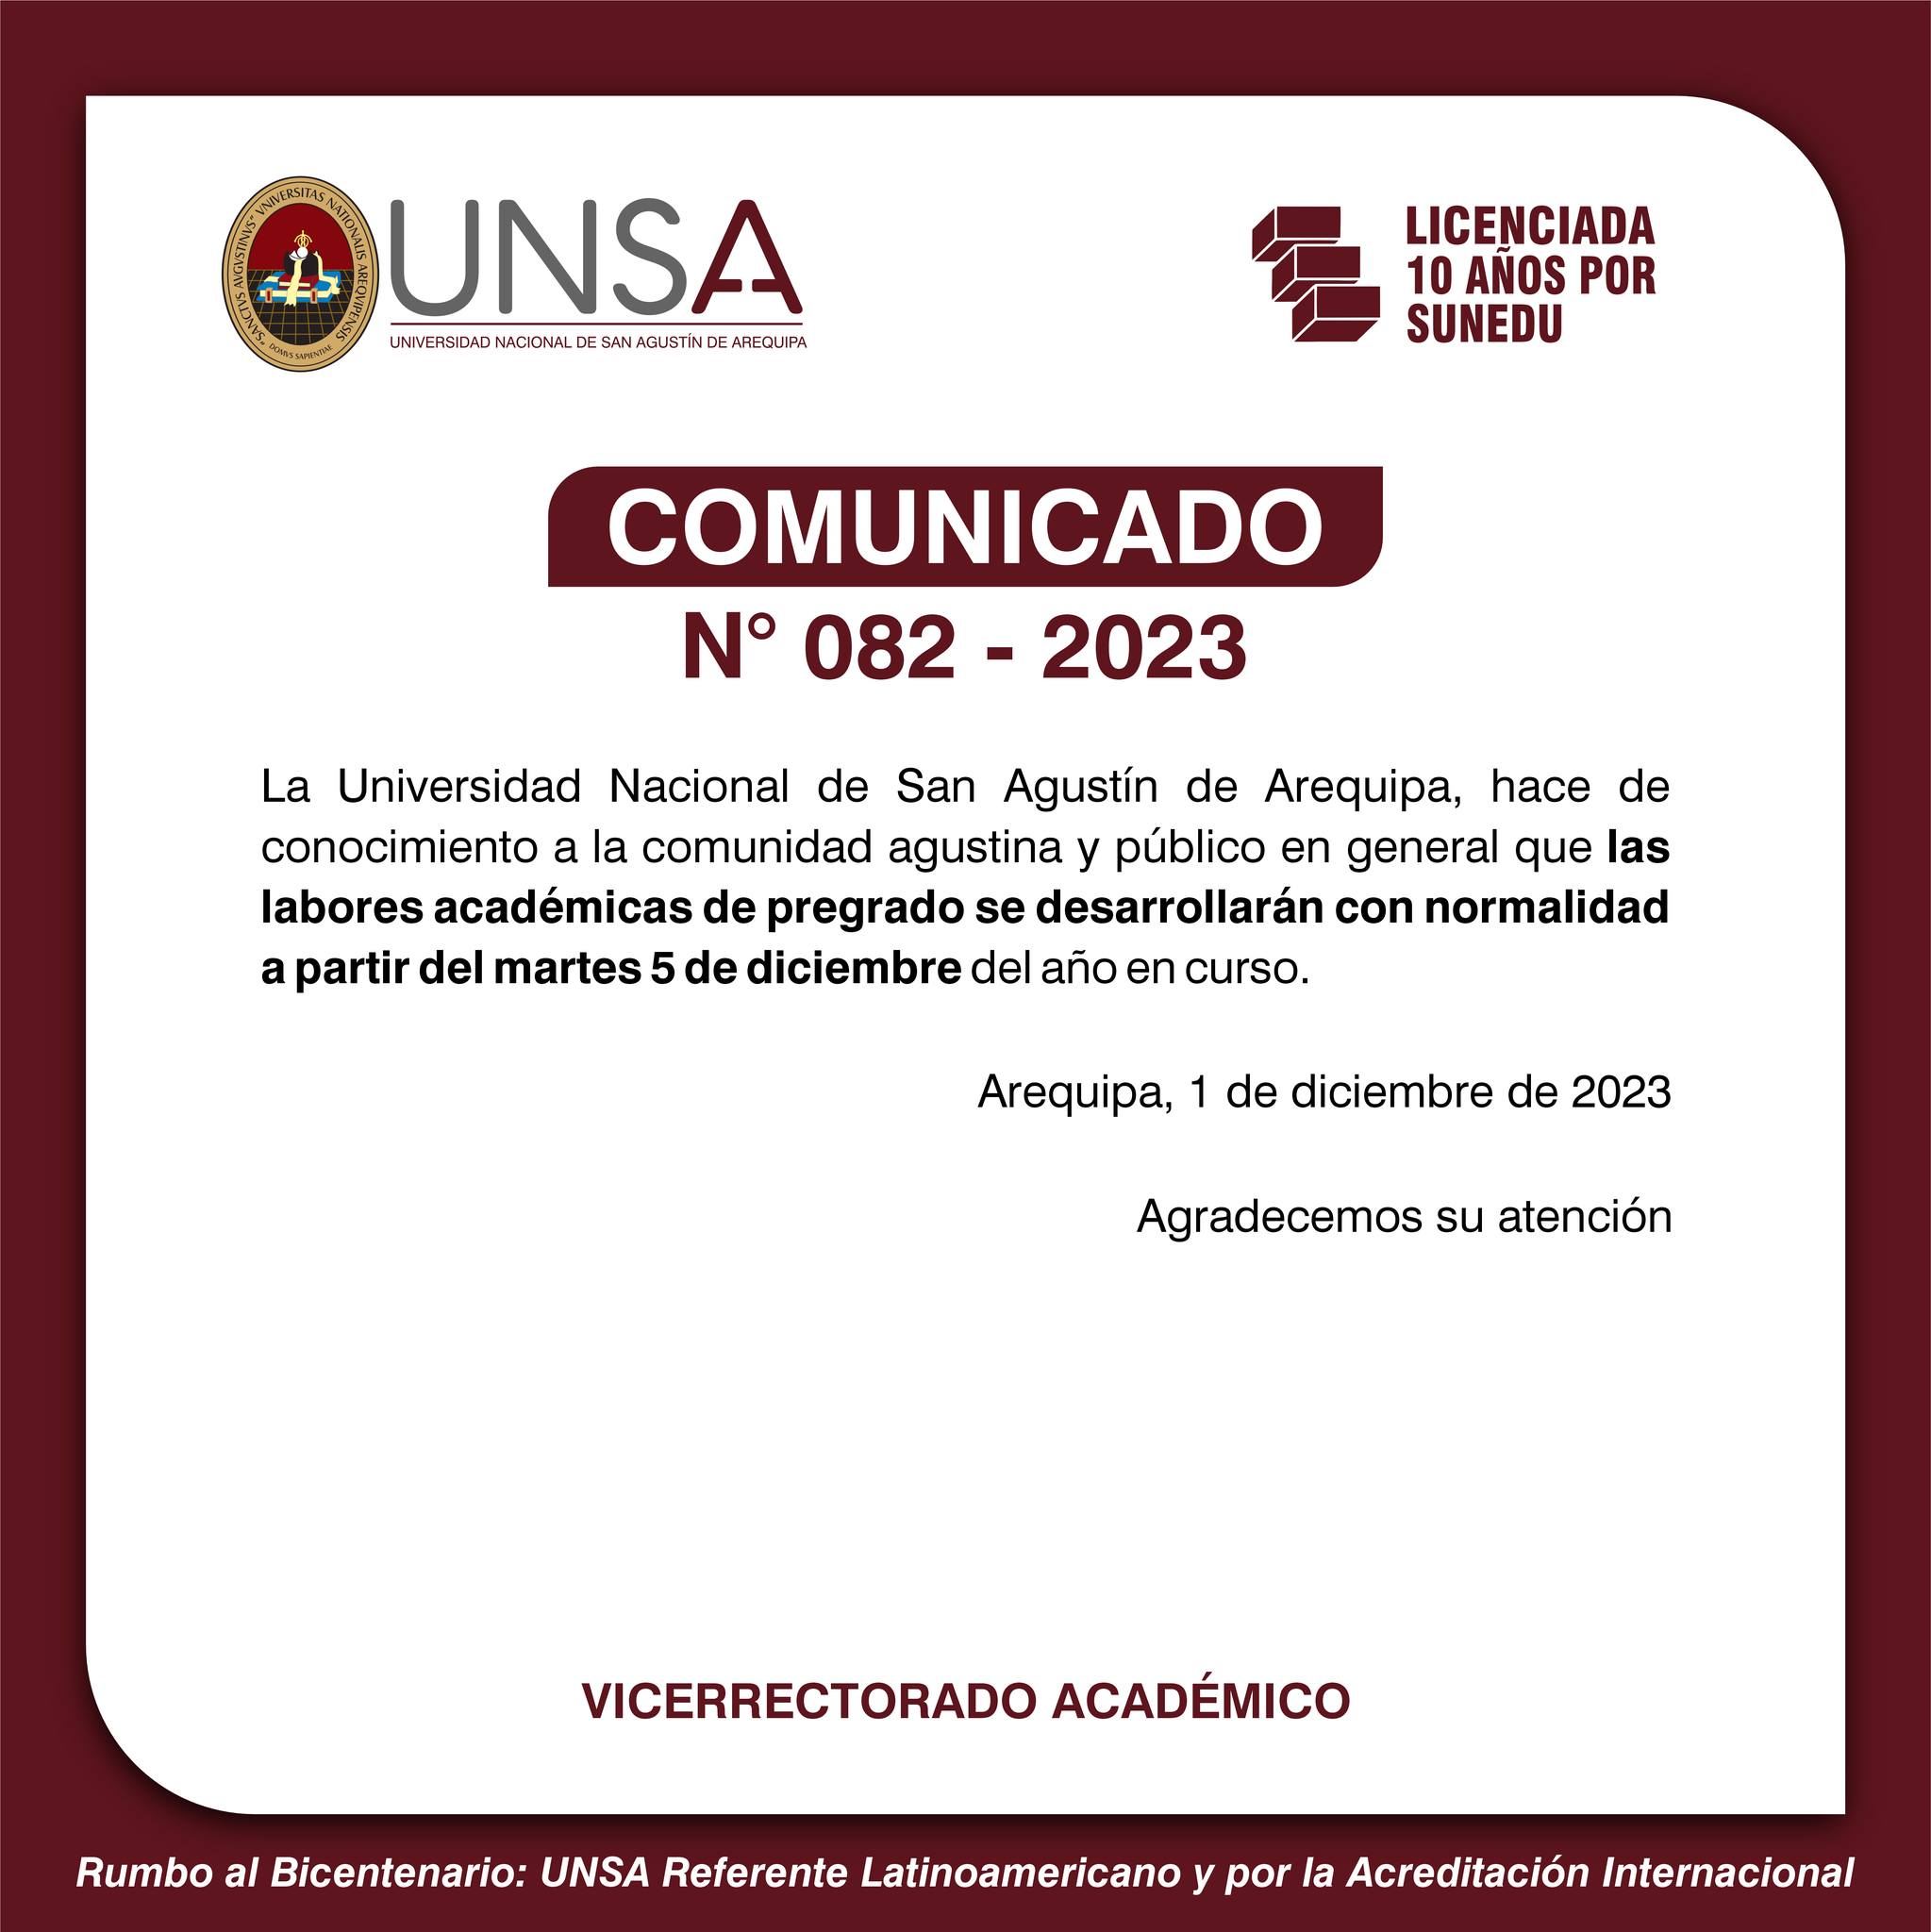 UNSA, Arequipa, huelga universitaria